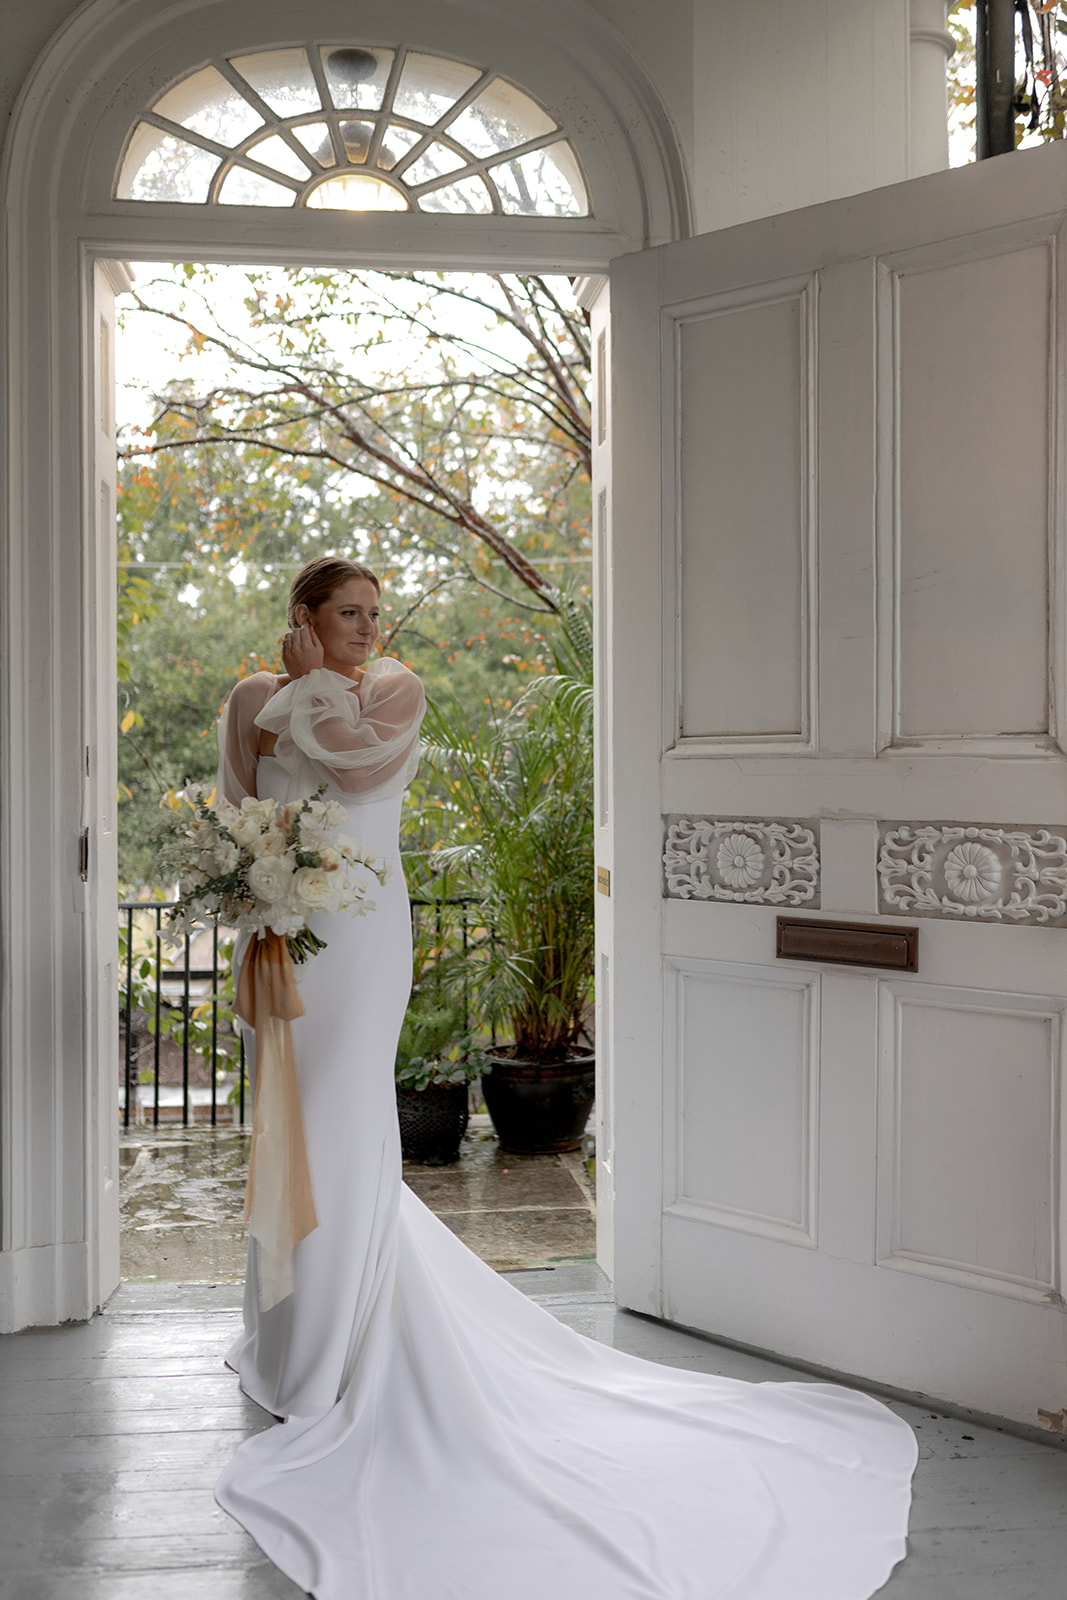 Bridal portrait taken at Wedding at Gov. Thomas Bennett House. Bride standing in tall doorway with bouquet.